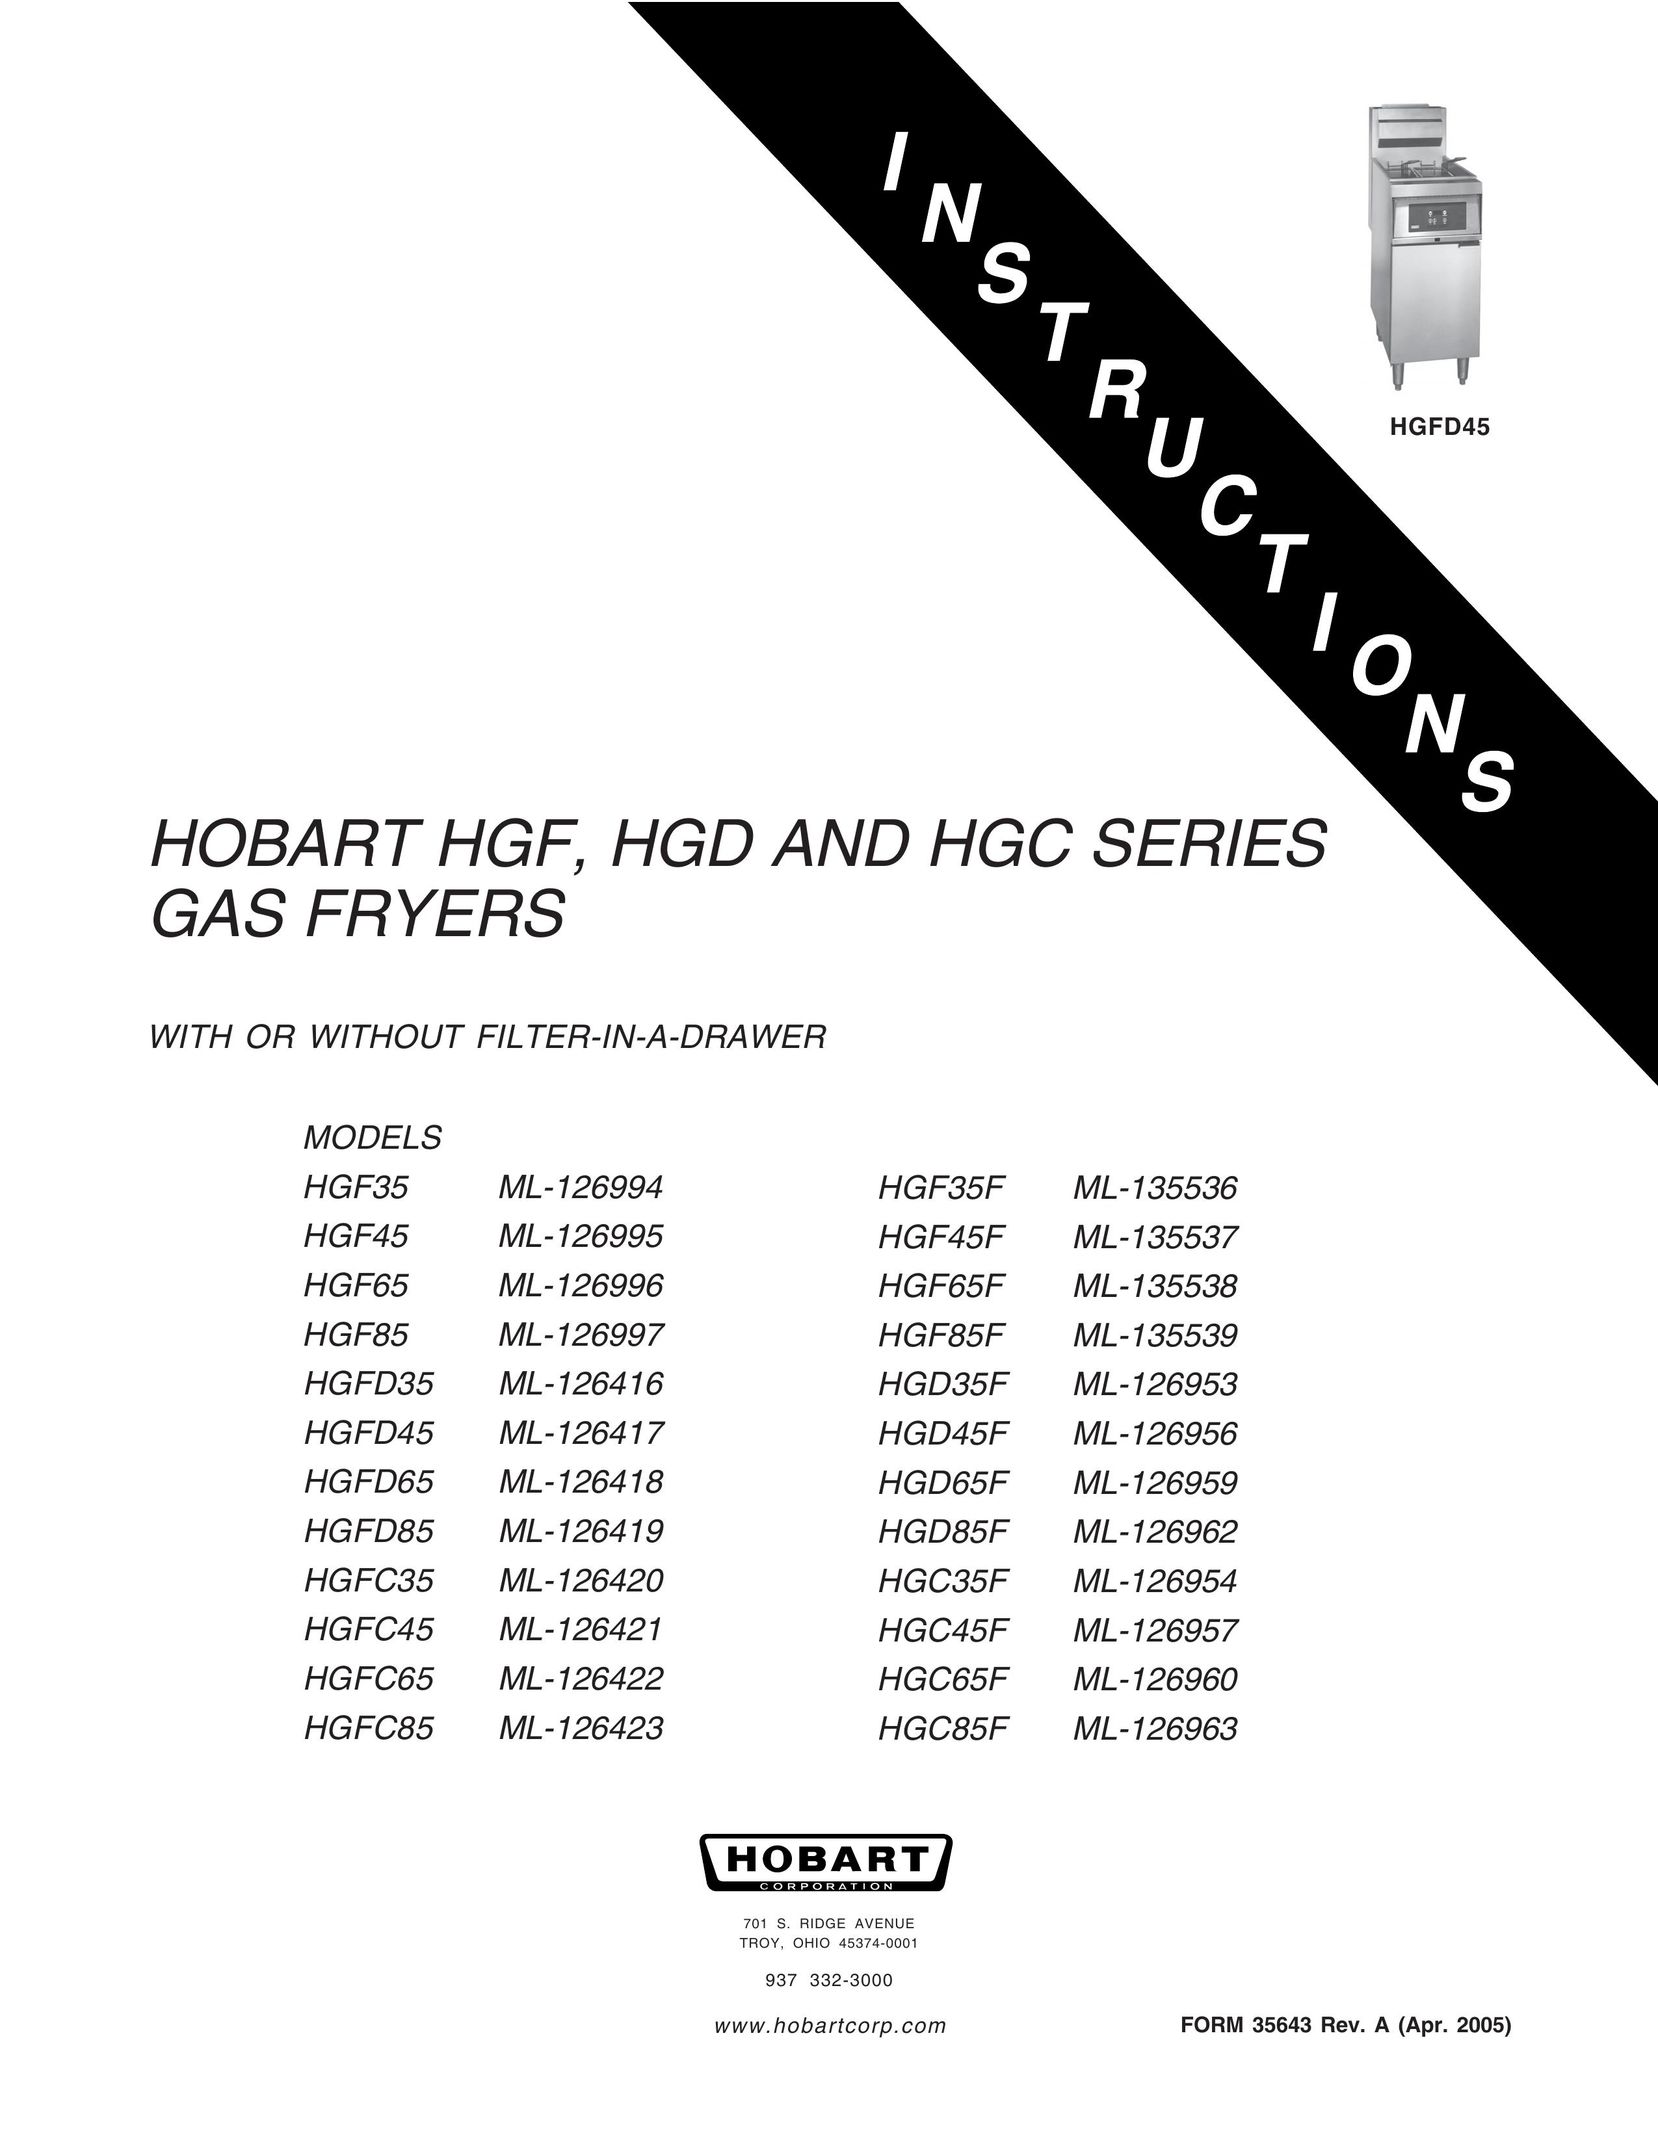 Hobart HGC35F ML-126954 Fryer User Manual